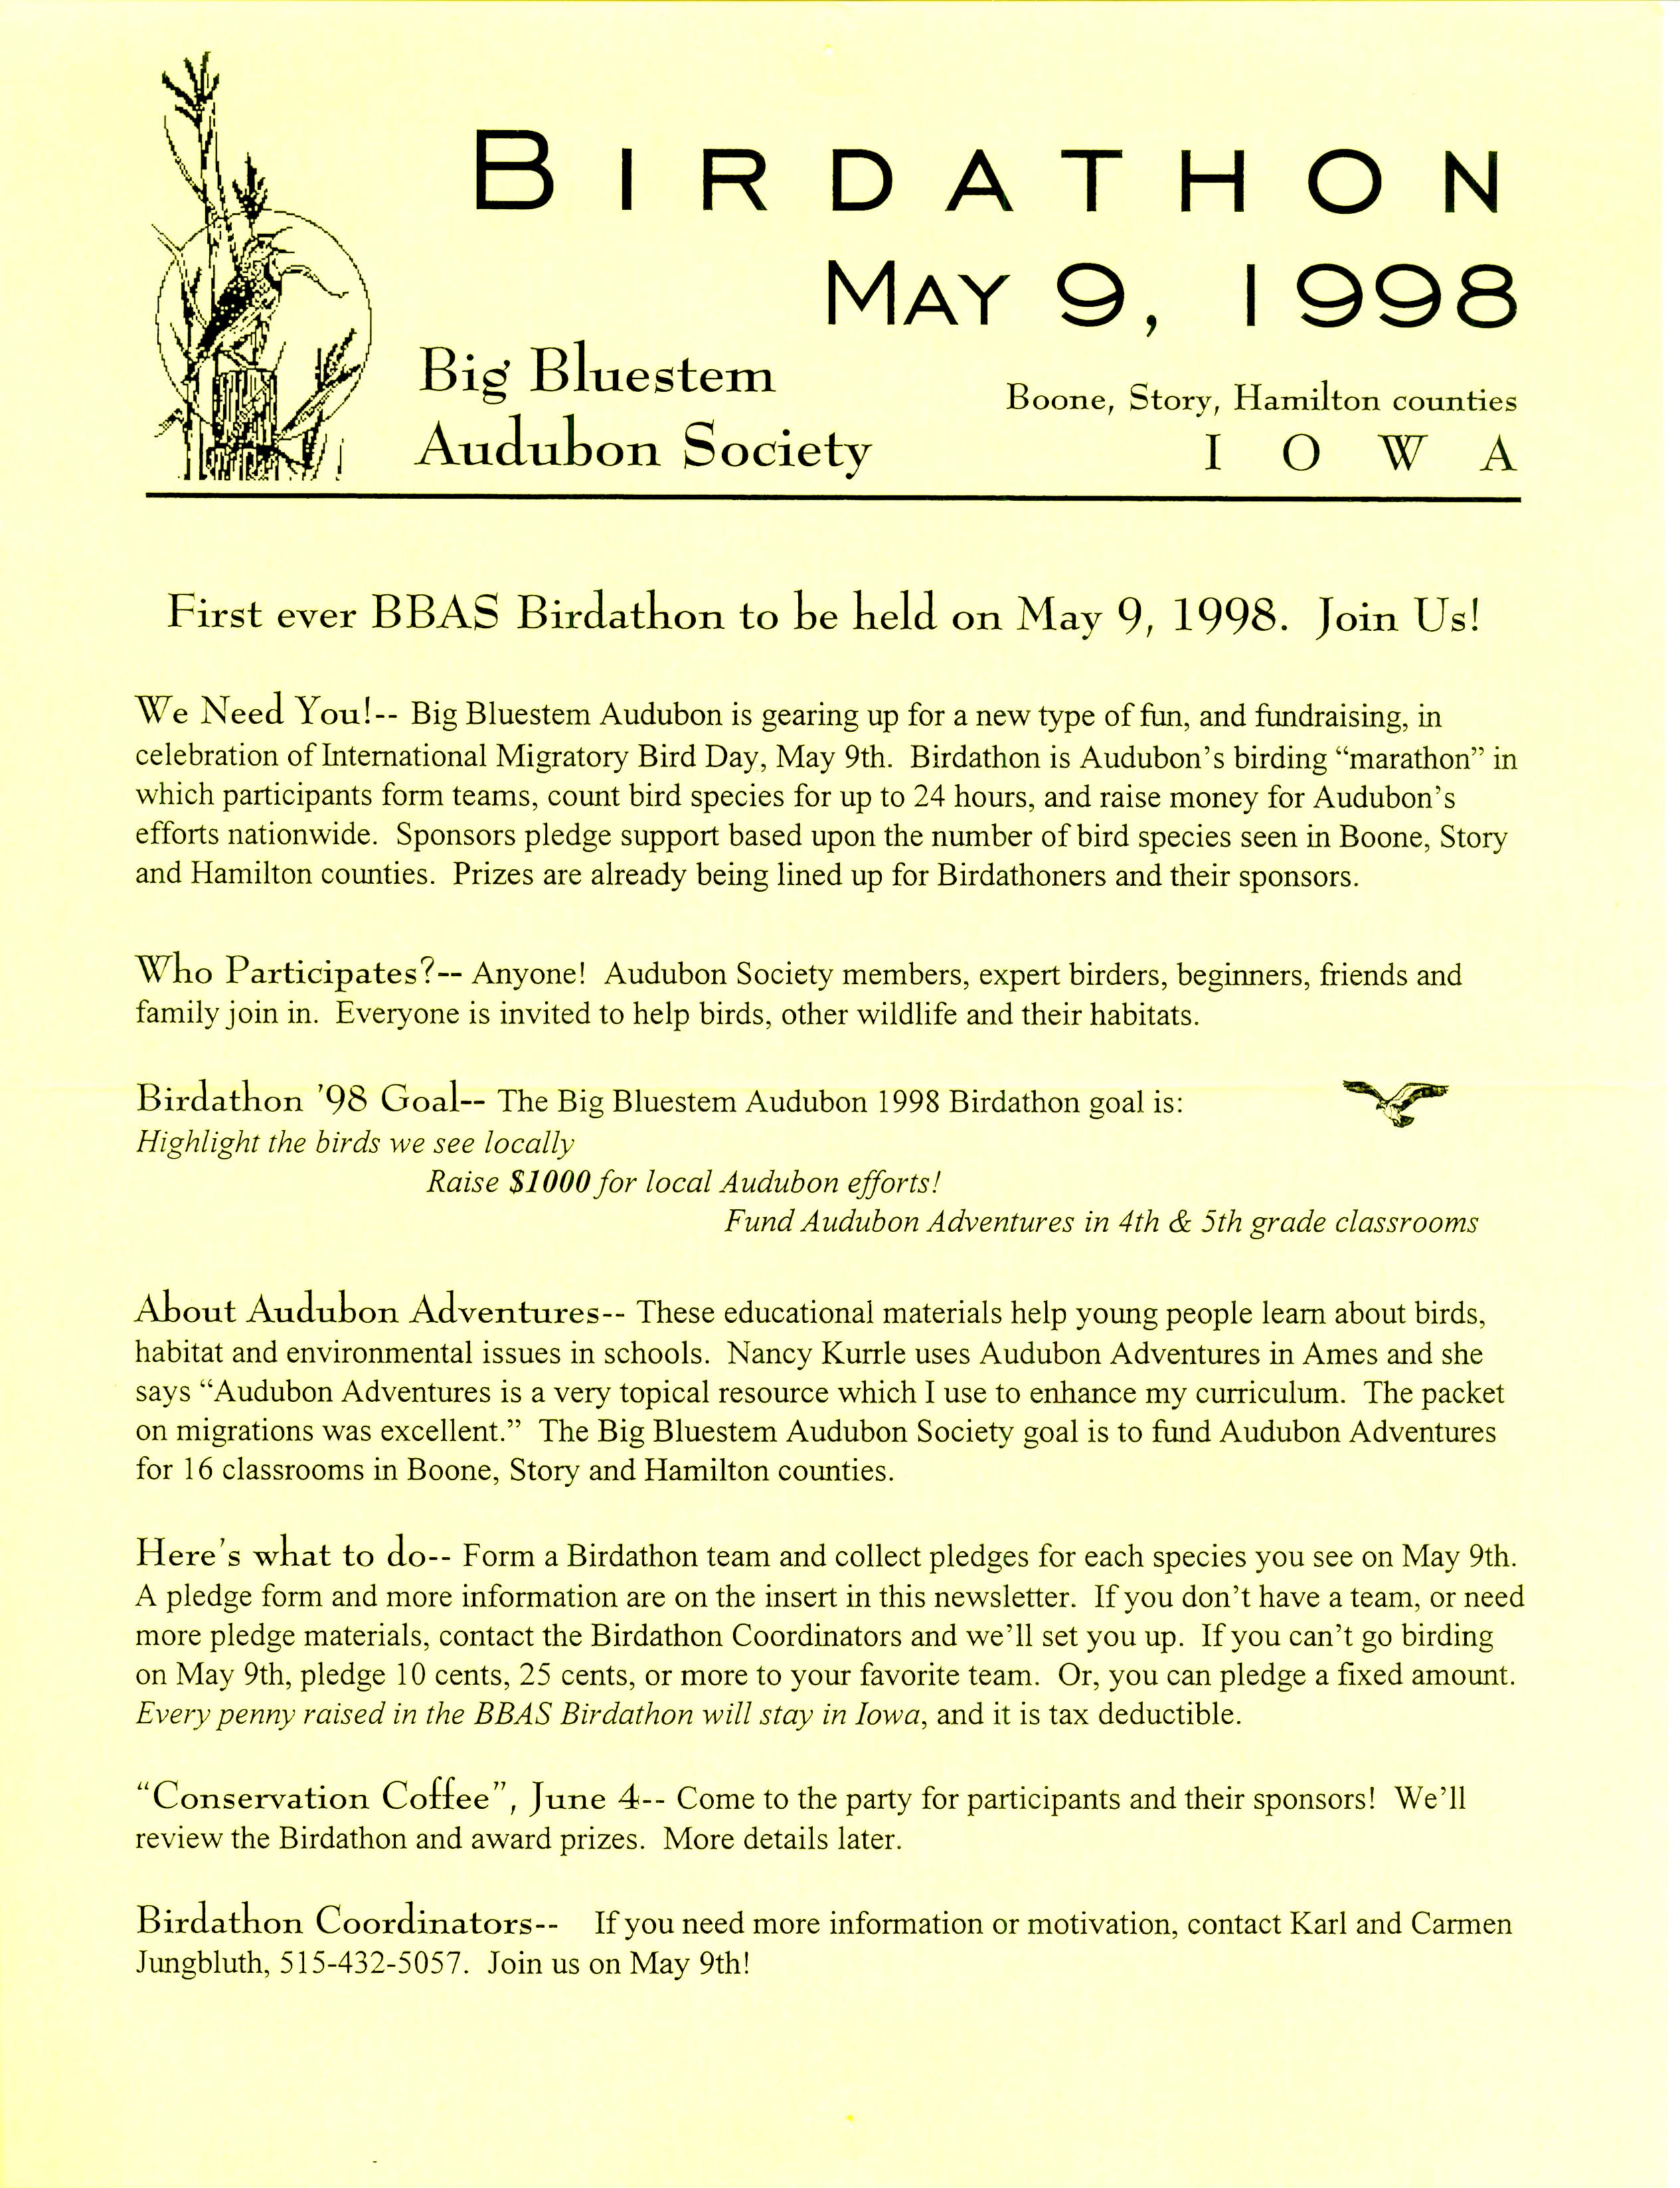  Big Bluestem Audubon Society Birdathon flyer